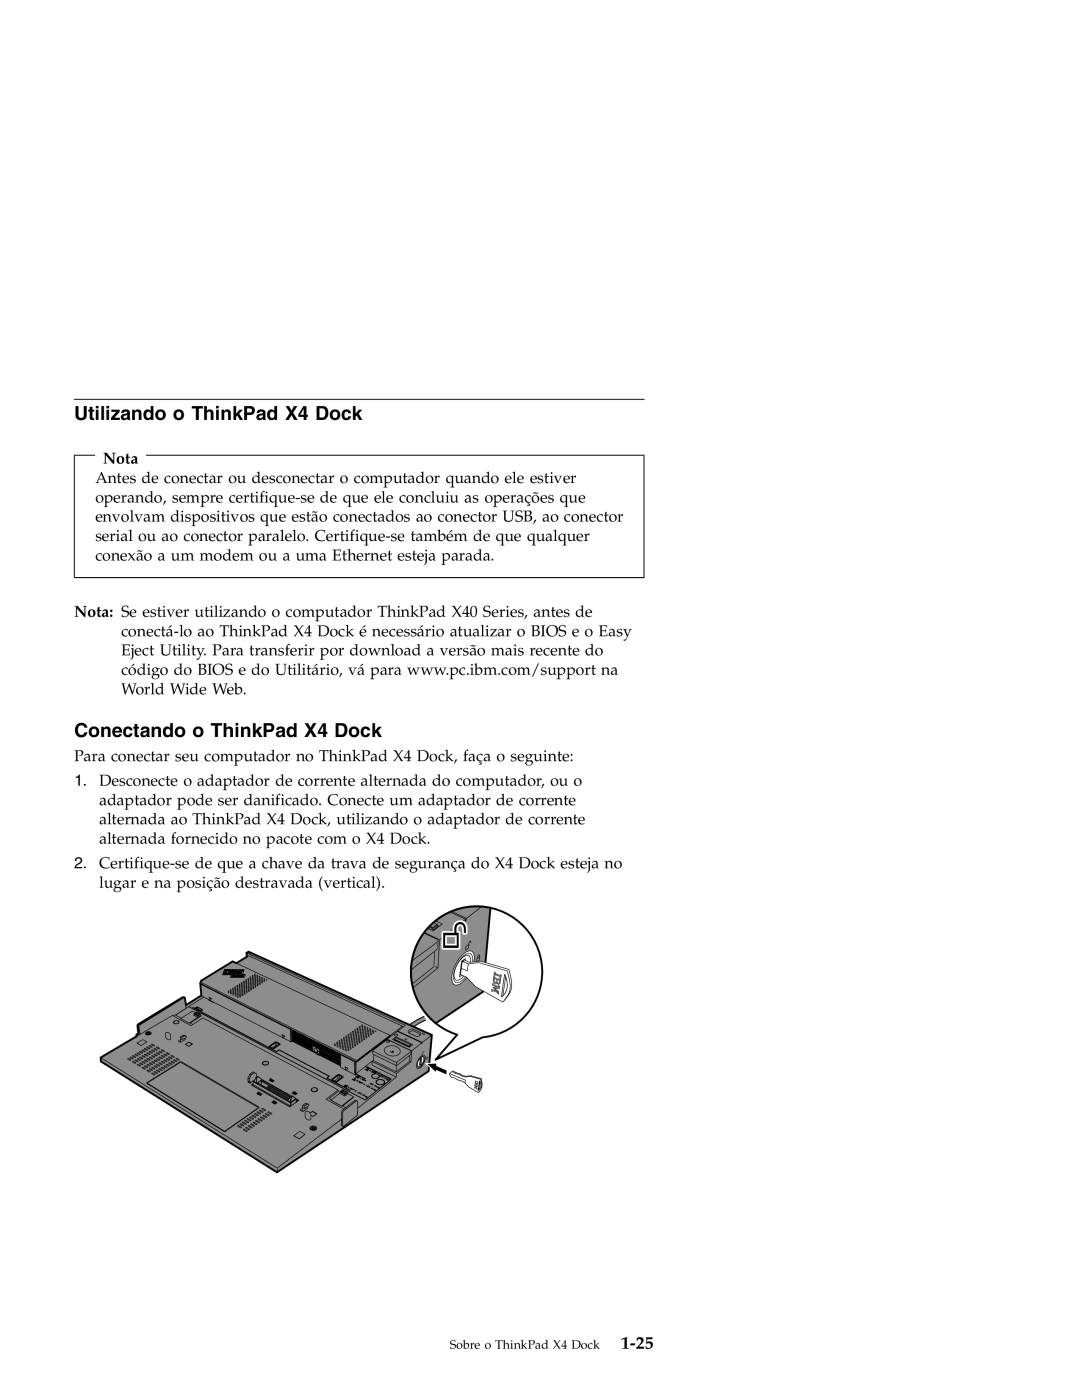 IBM manual Utilizando o ThinkPad X4 Dock, Conectando o ThinkPad X4 Dock, Nota 